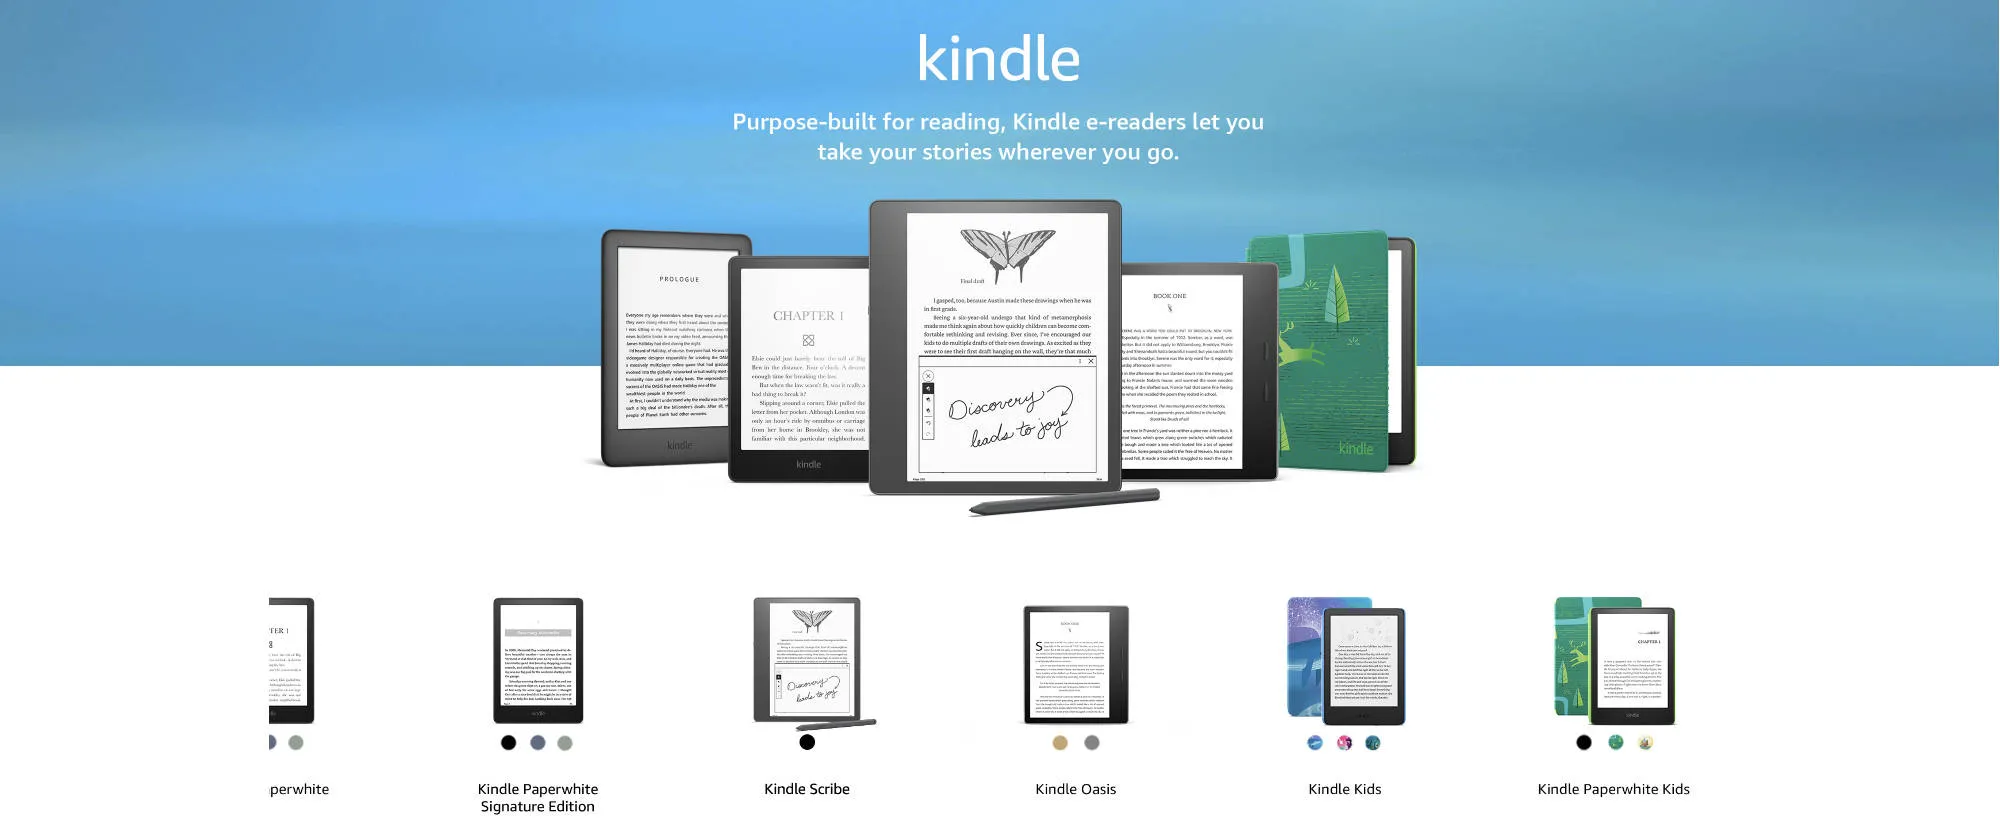 download kindle books as pdf kindle e-reader